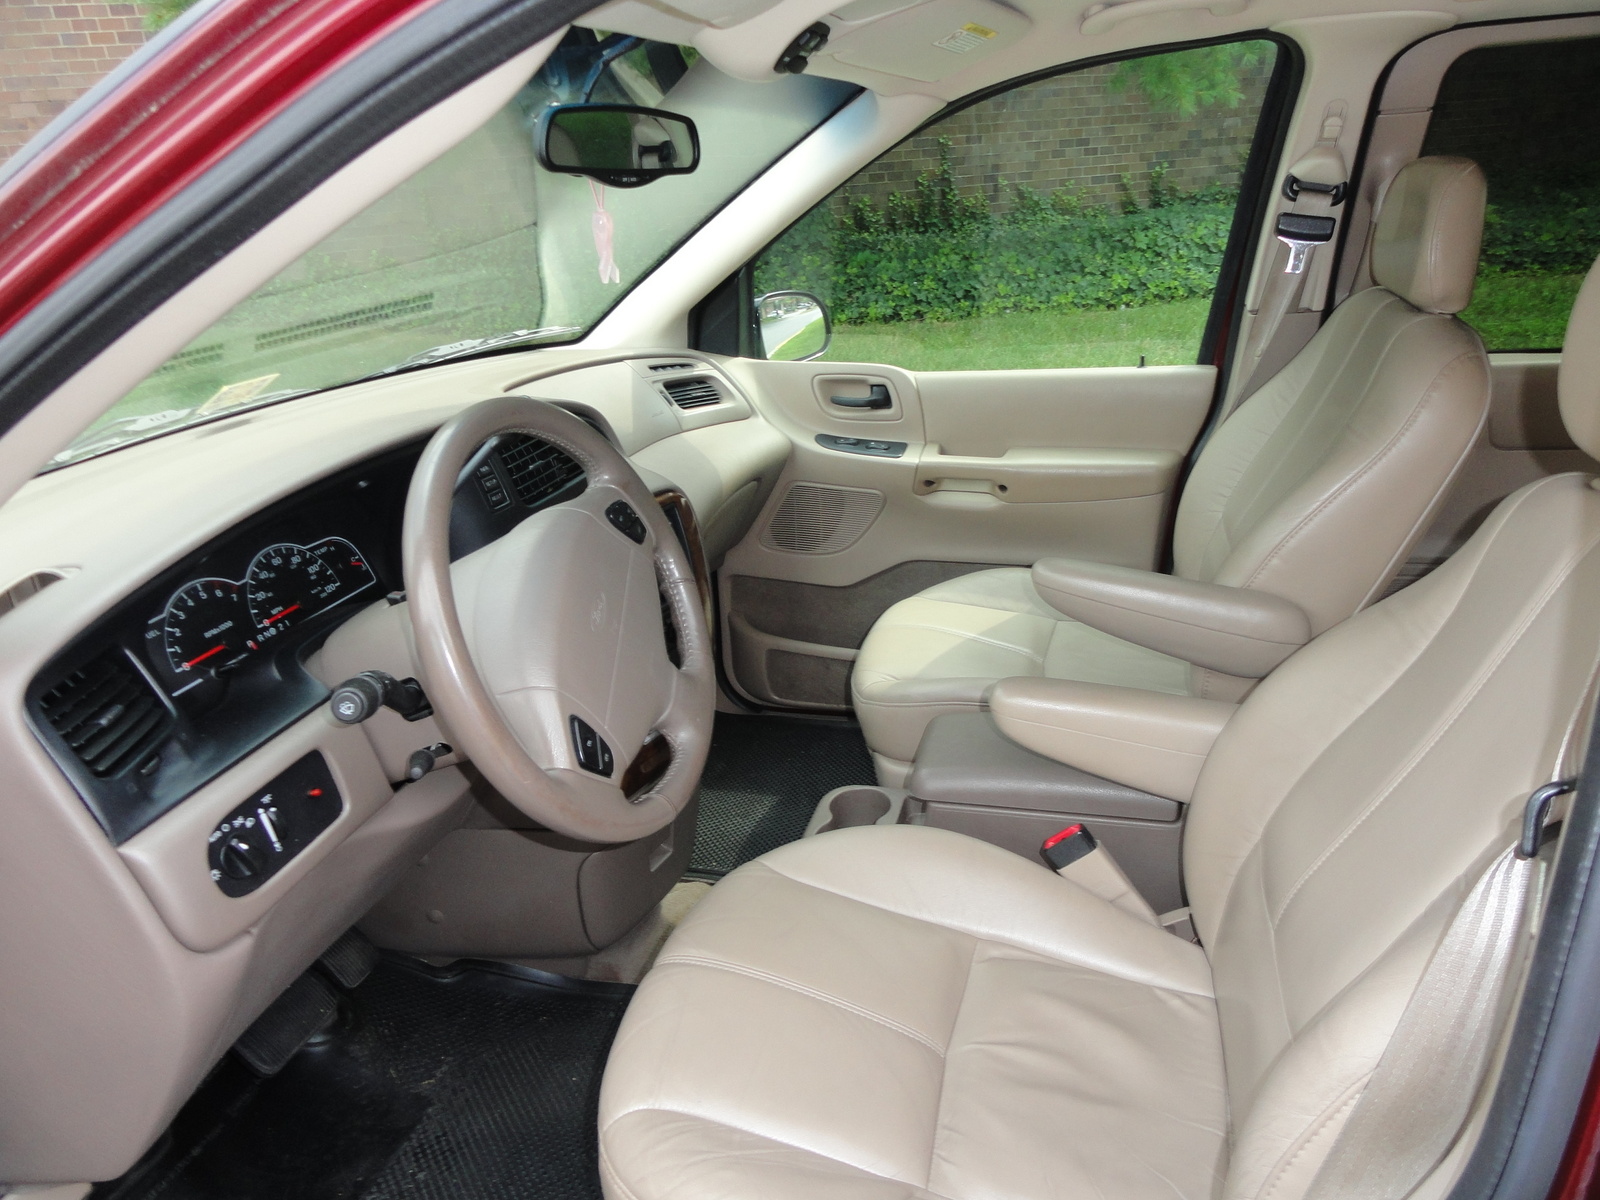 2000 Ford windstar interior dimensions #4